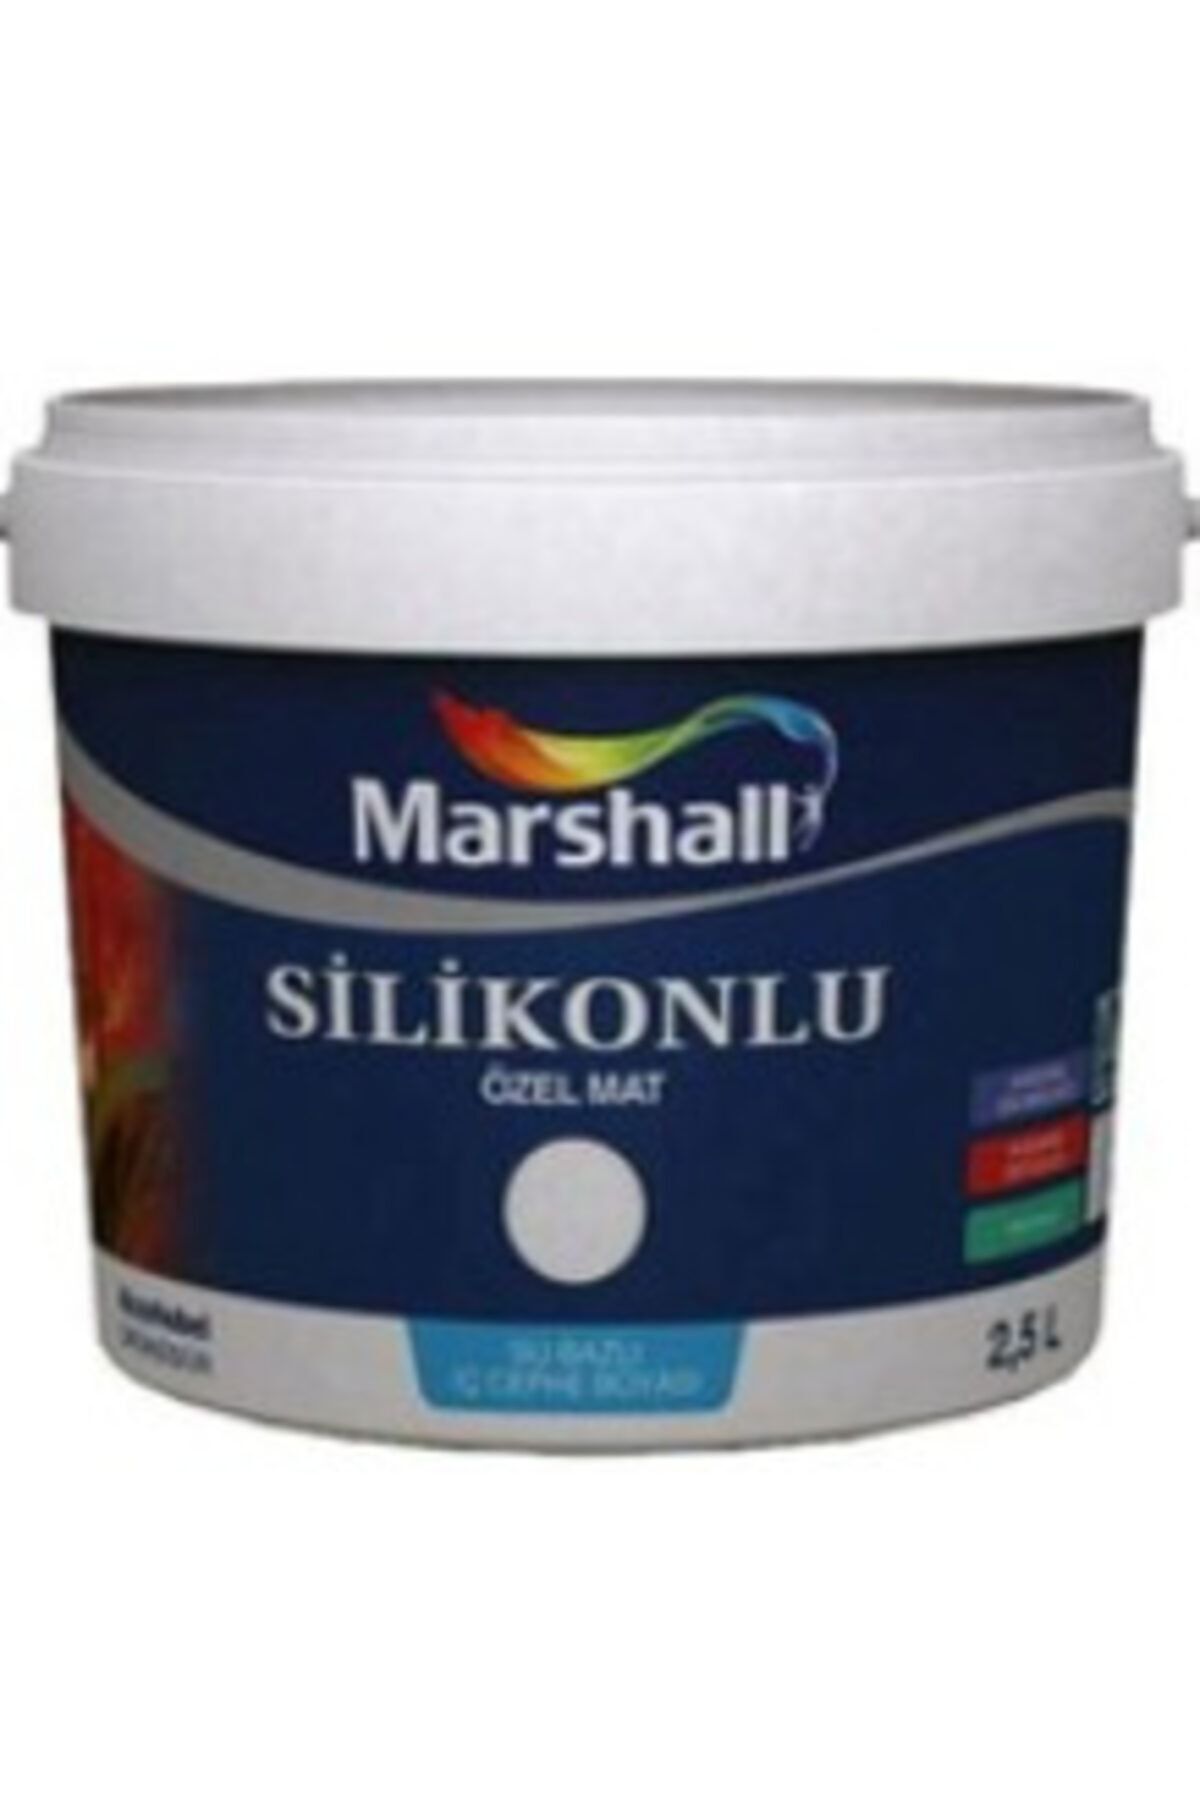 Marshall Silikonlu Özel Mat 2,5 lt Mum Işığı Rengi Boya